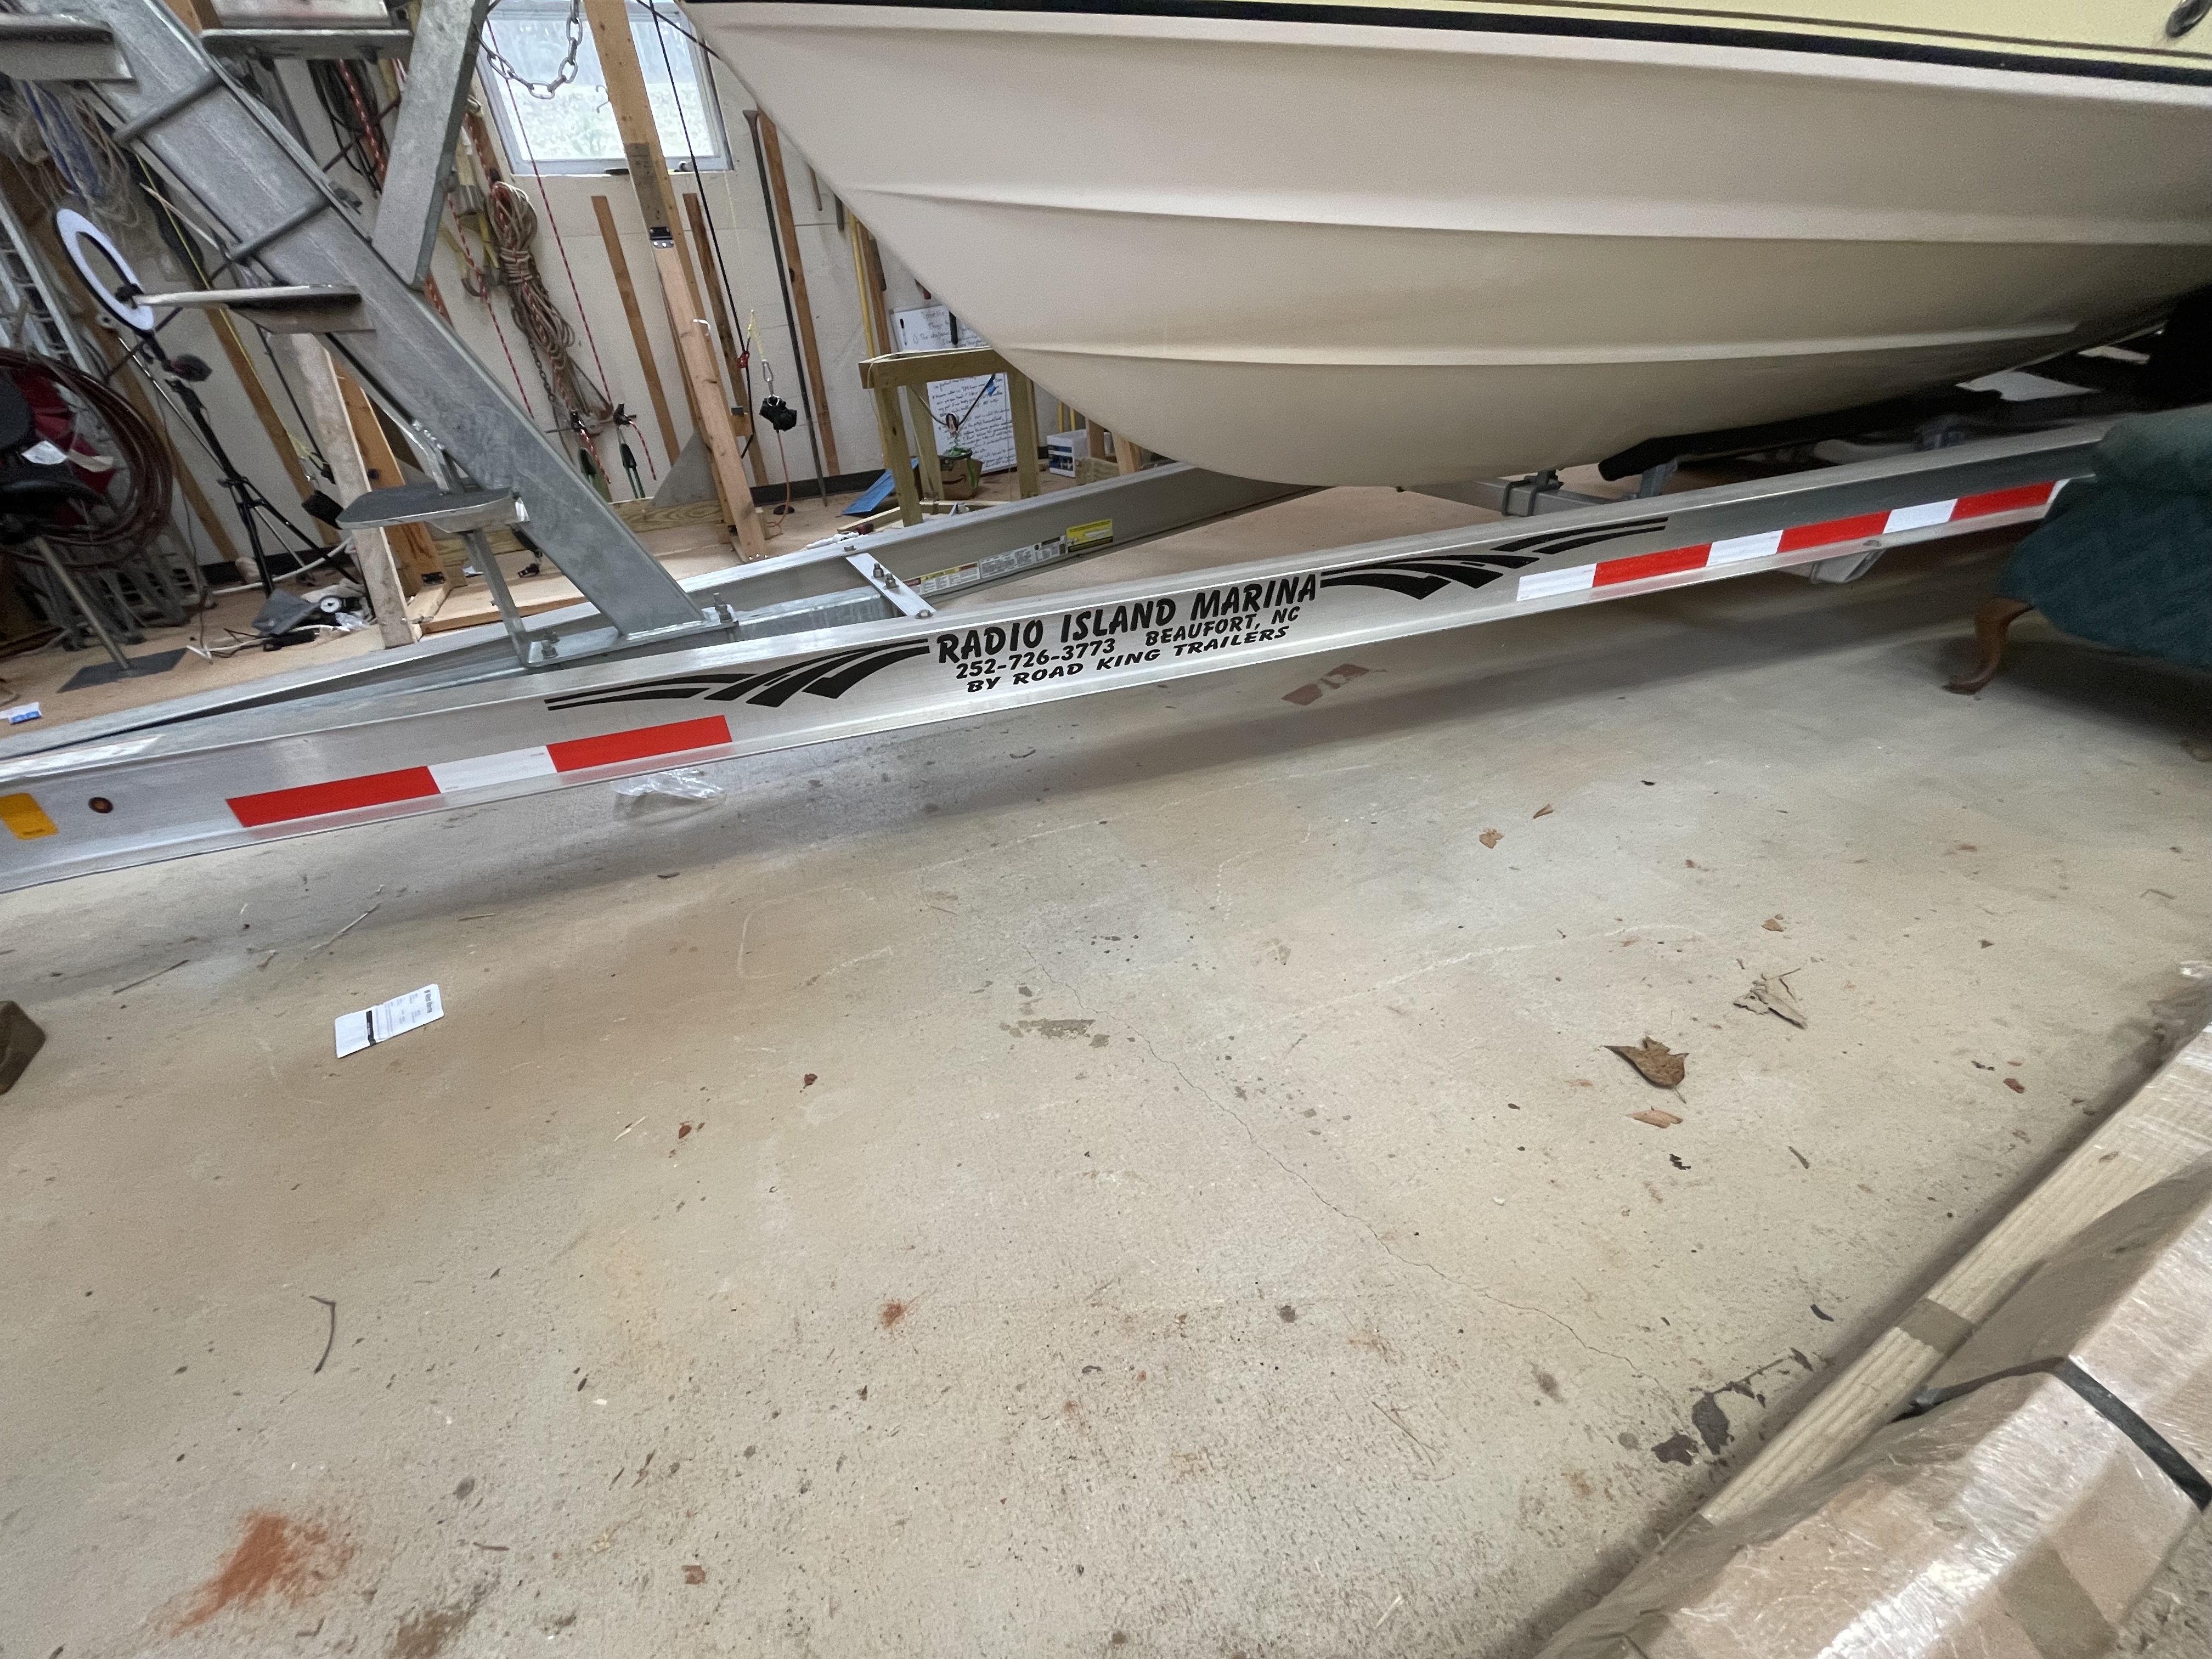 2007 Grady-White 283 Release Power boat for sale in Gainesville, GA - image 8 